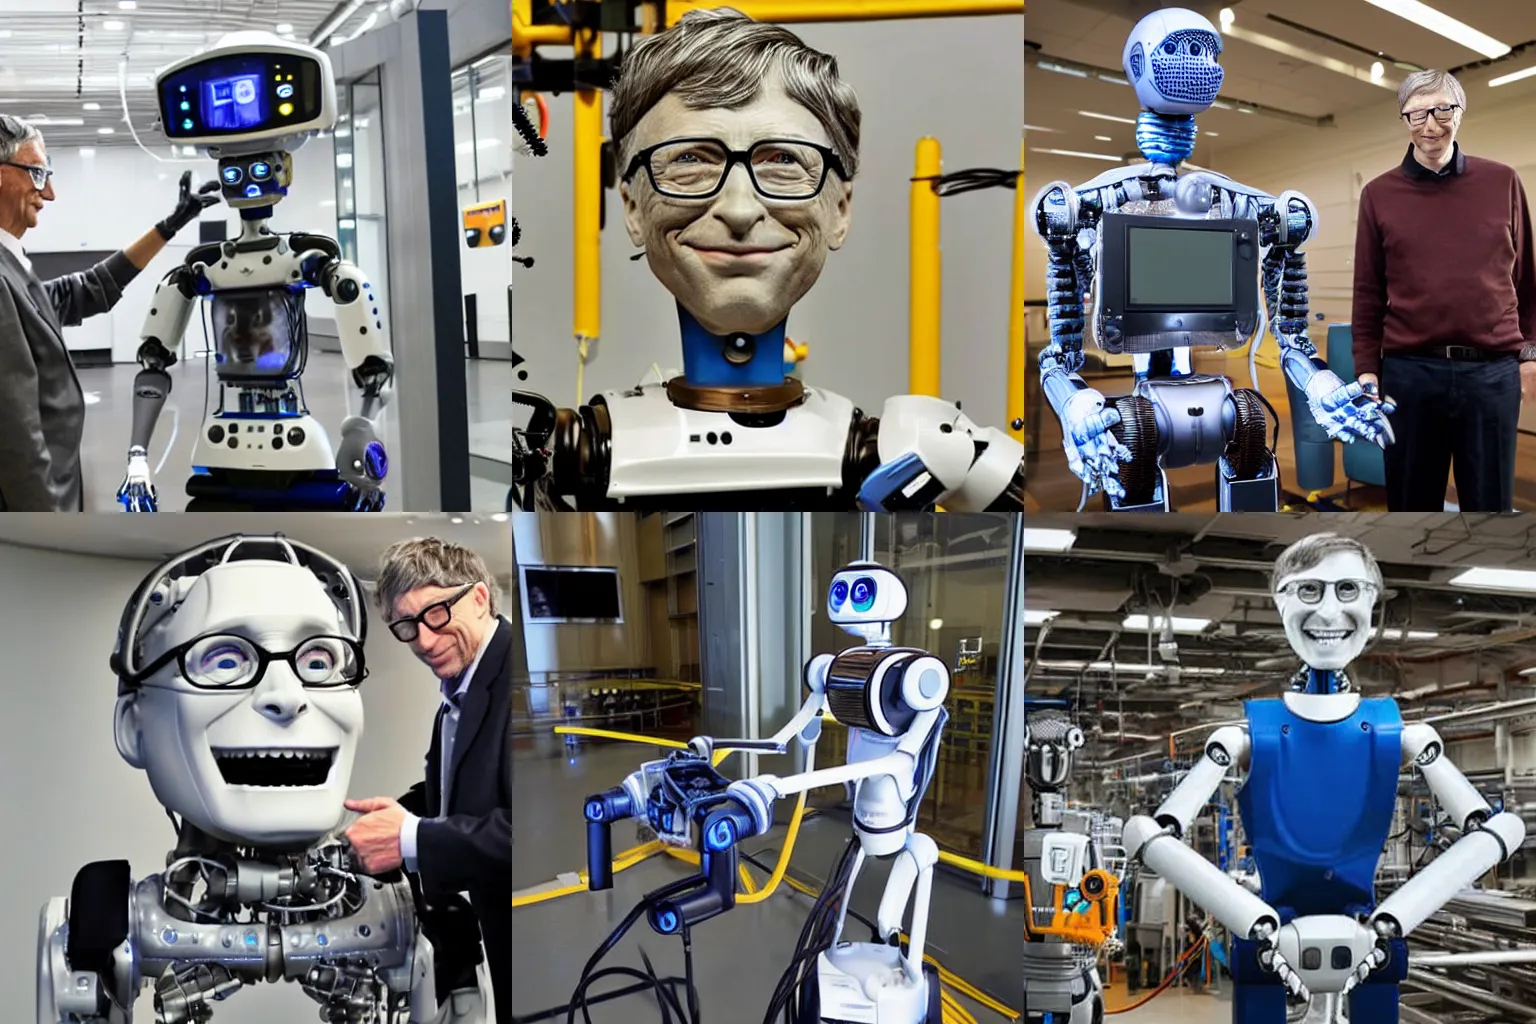 Prompt: animatronic robot of Bill Gates undergoing maintenance